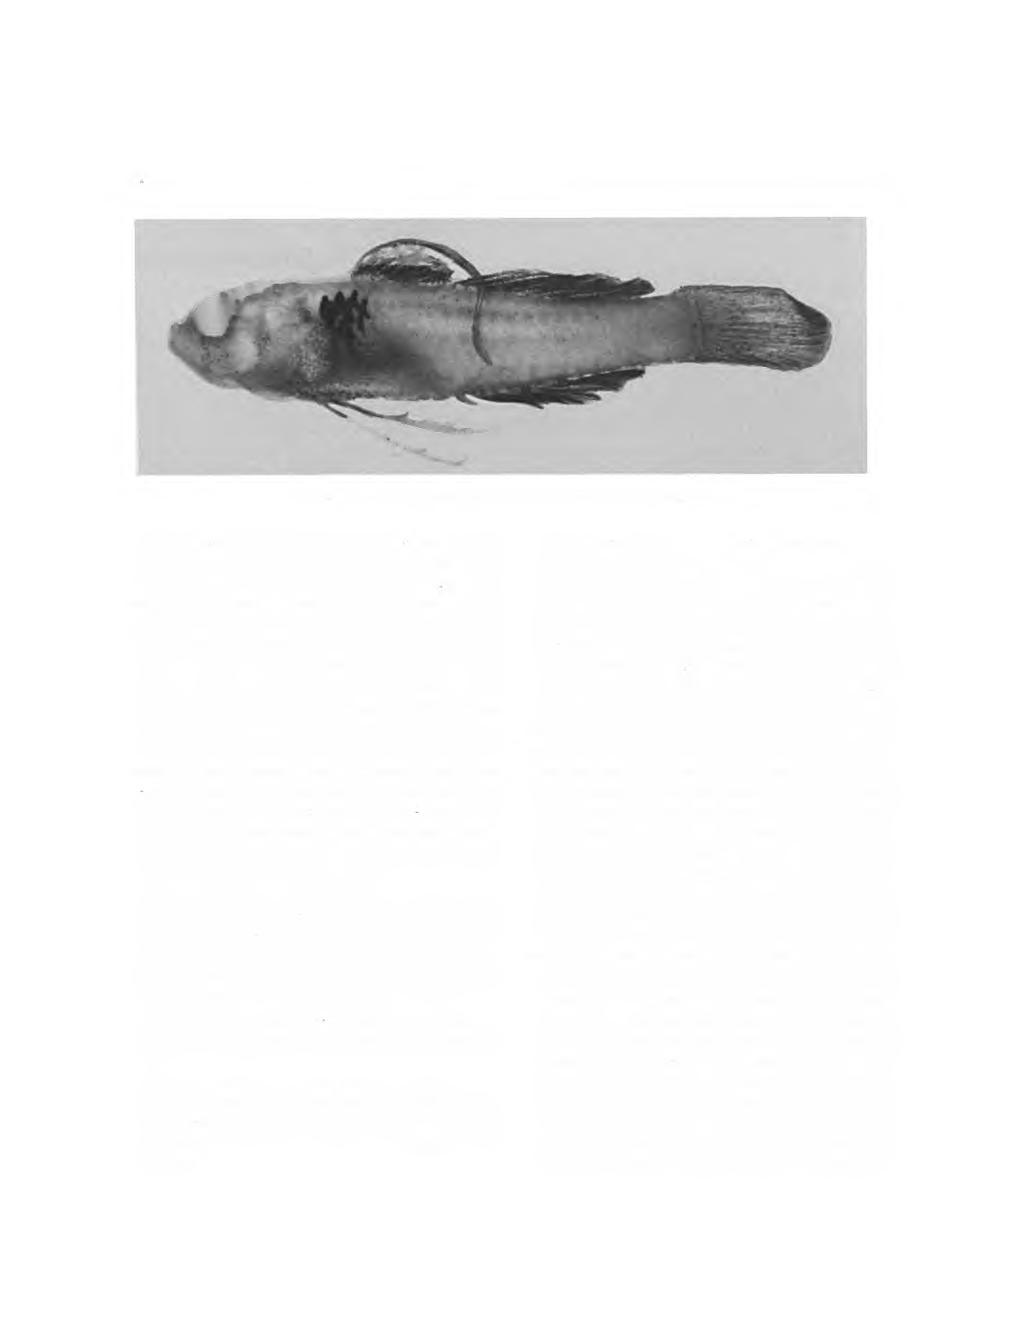 00 SMITHSONIAN CONTRIBUTIONS TO ZOOLOGY FIGURE 55. Eviota infulata, RUSI 5, male,.0 mm SL, Mauritius.